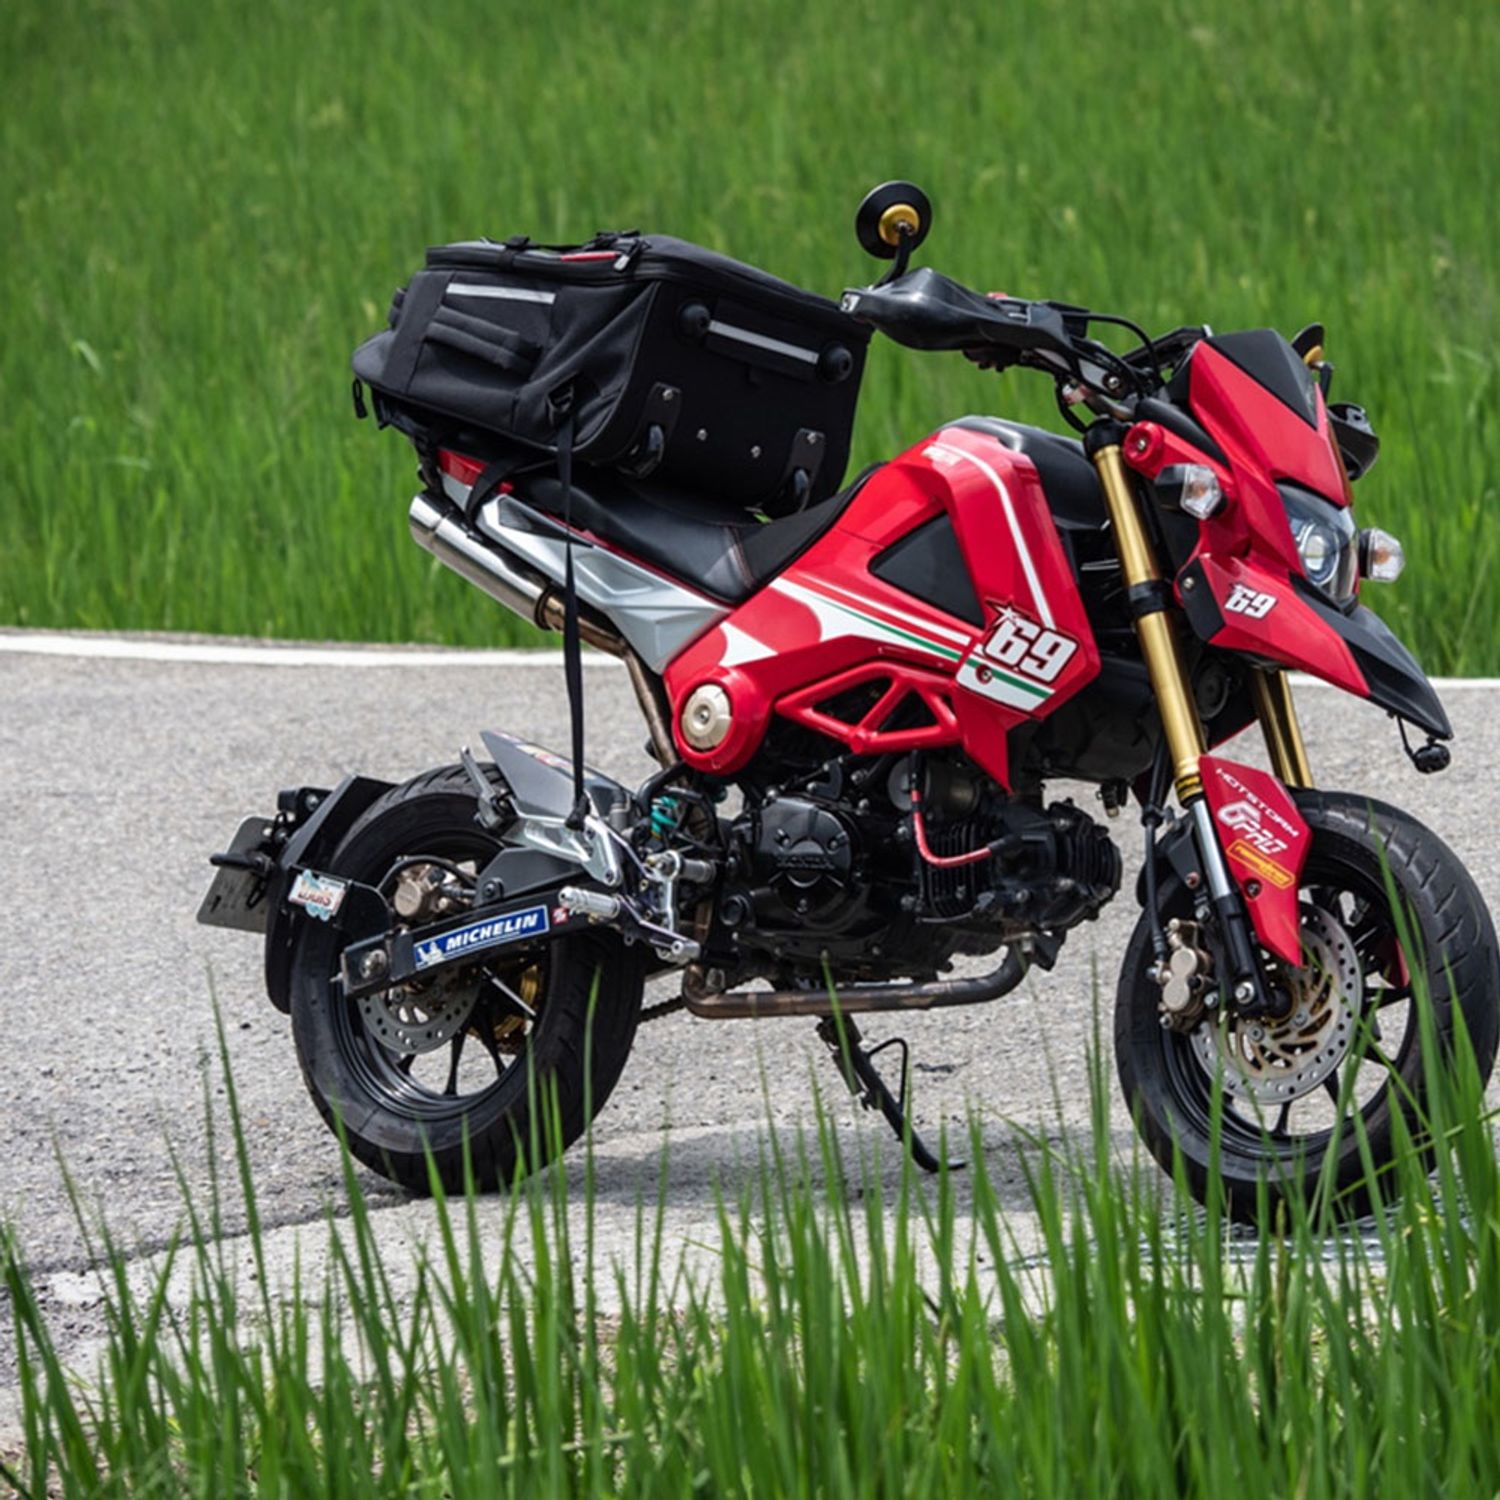 Niche 樂奇-摩托車專用包|工具收納袋與攜帶系統|都會行旅後背包與配件包 | 